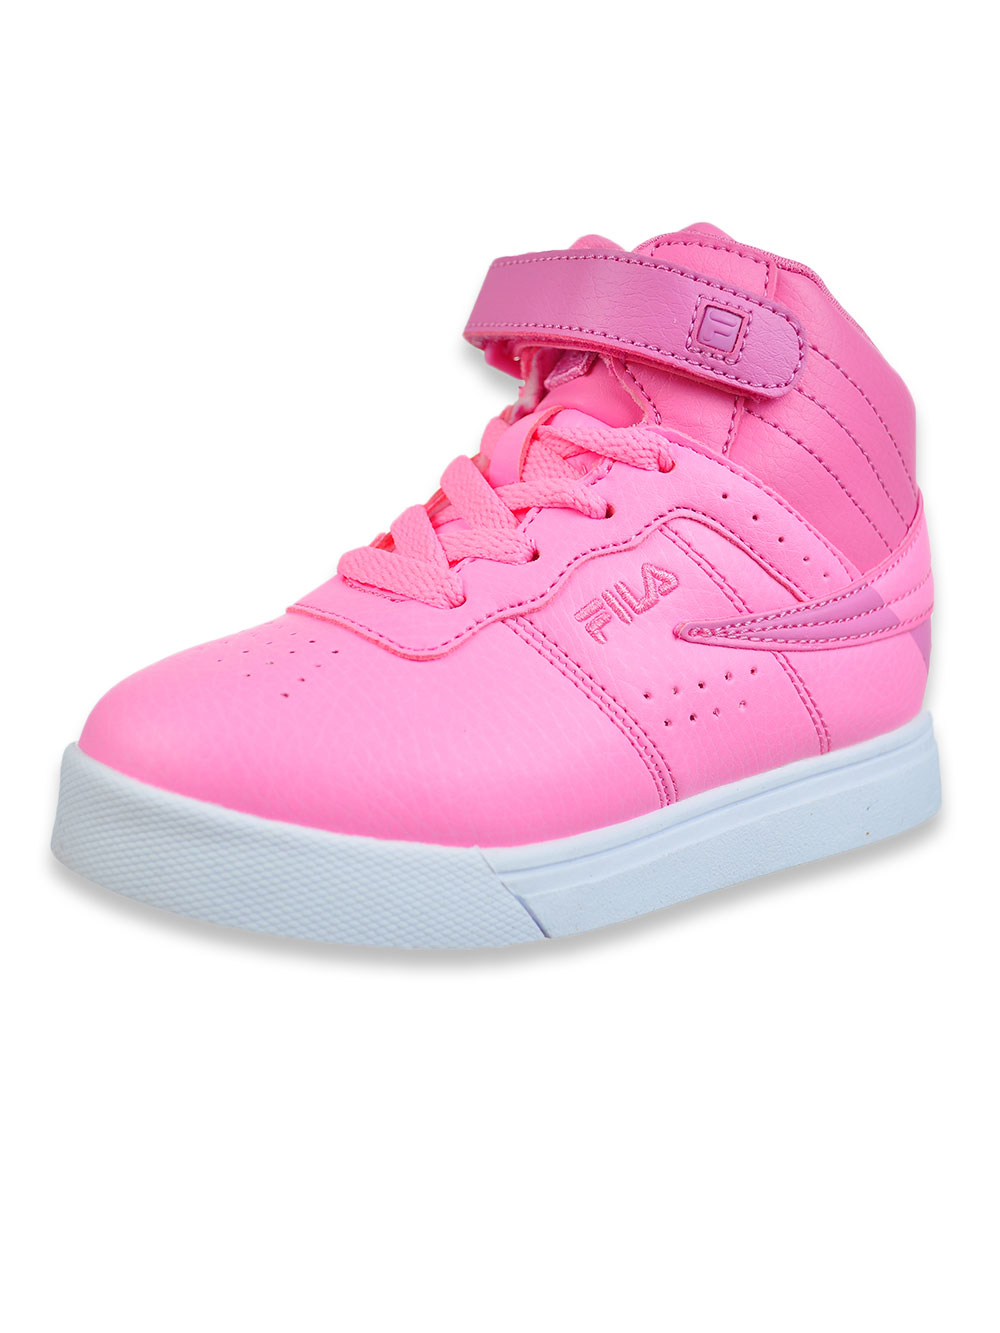 Girls Vulc 13 Hi Top Sneakers By Fila In Pink From Cookie S Kids